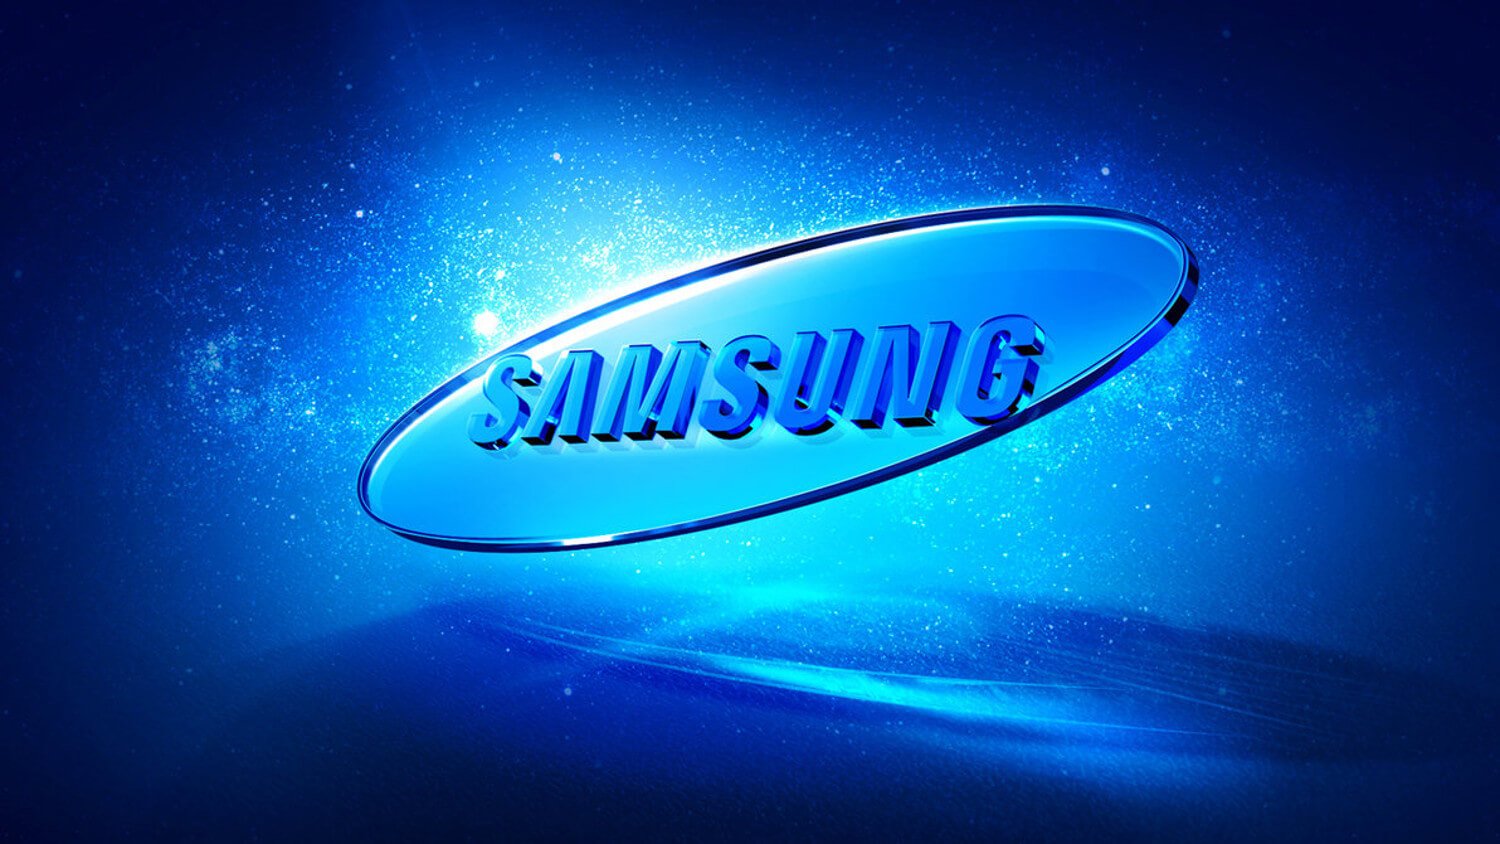 Samsung logo 2022